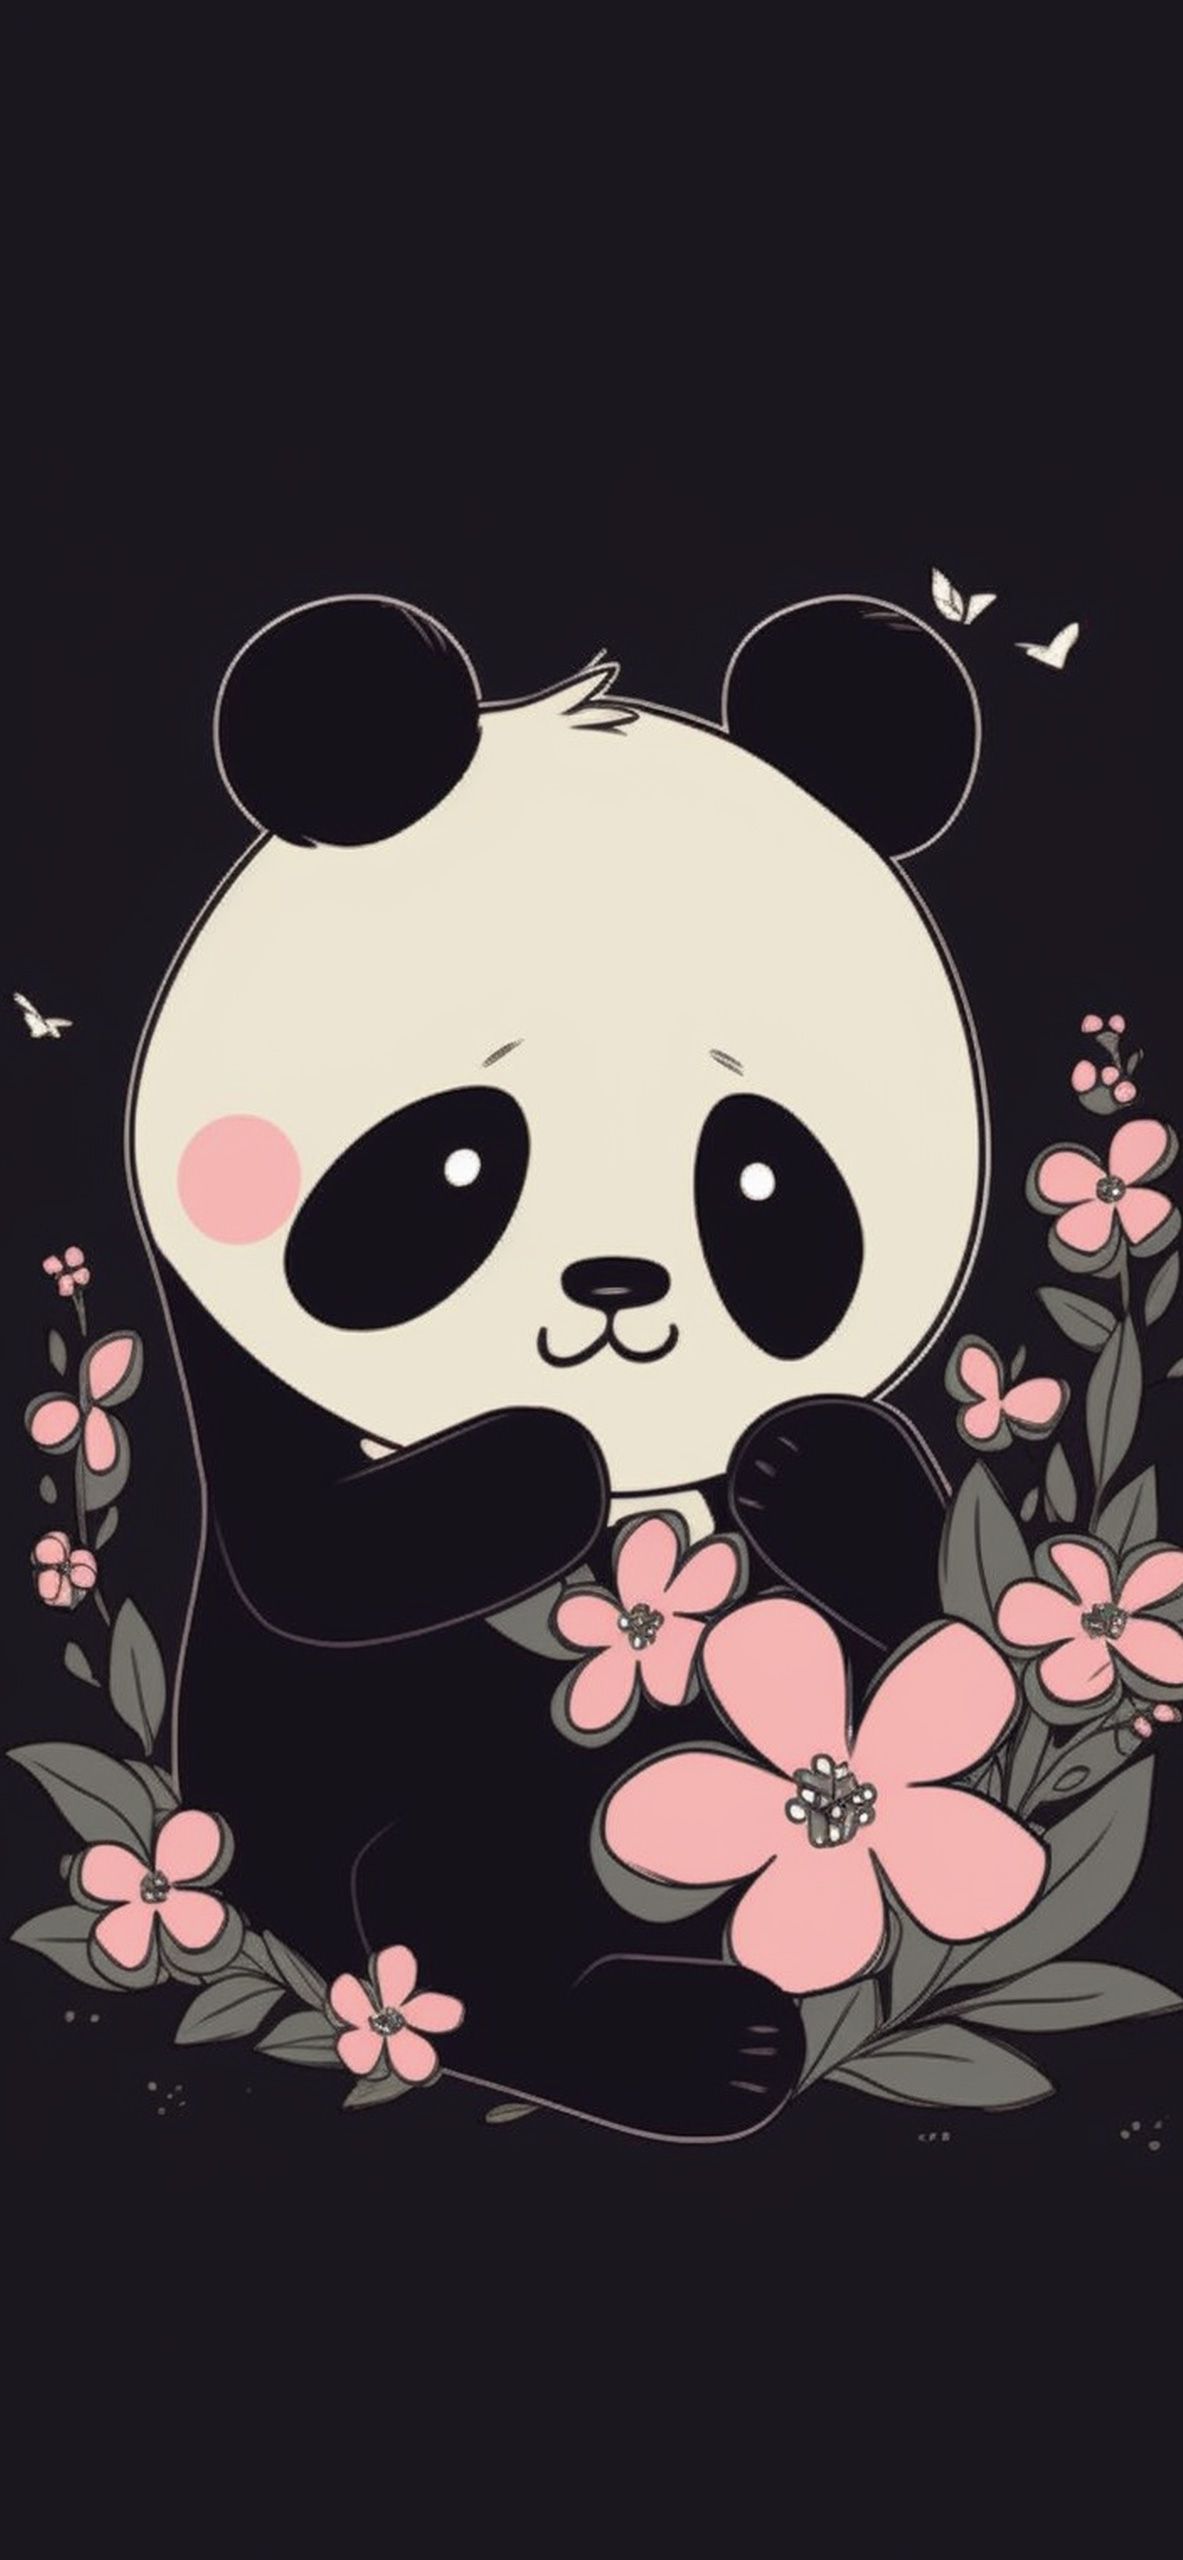 Cute Panda & Flowers Black Wallpaper Panda Wallpaper